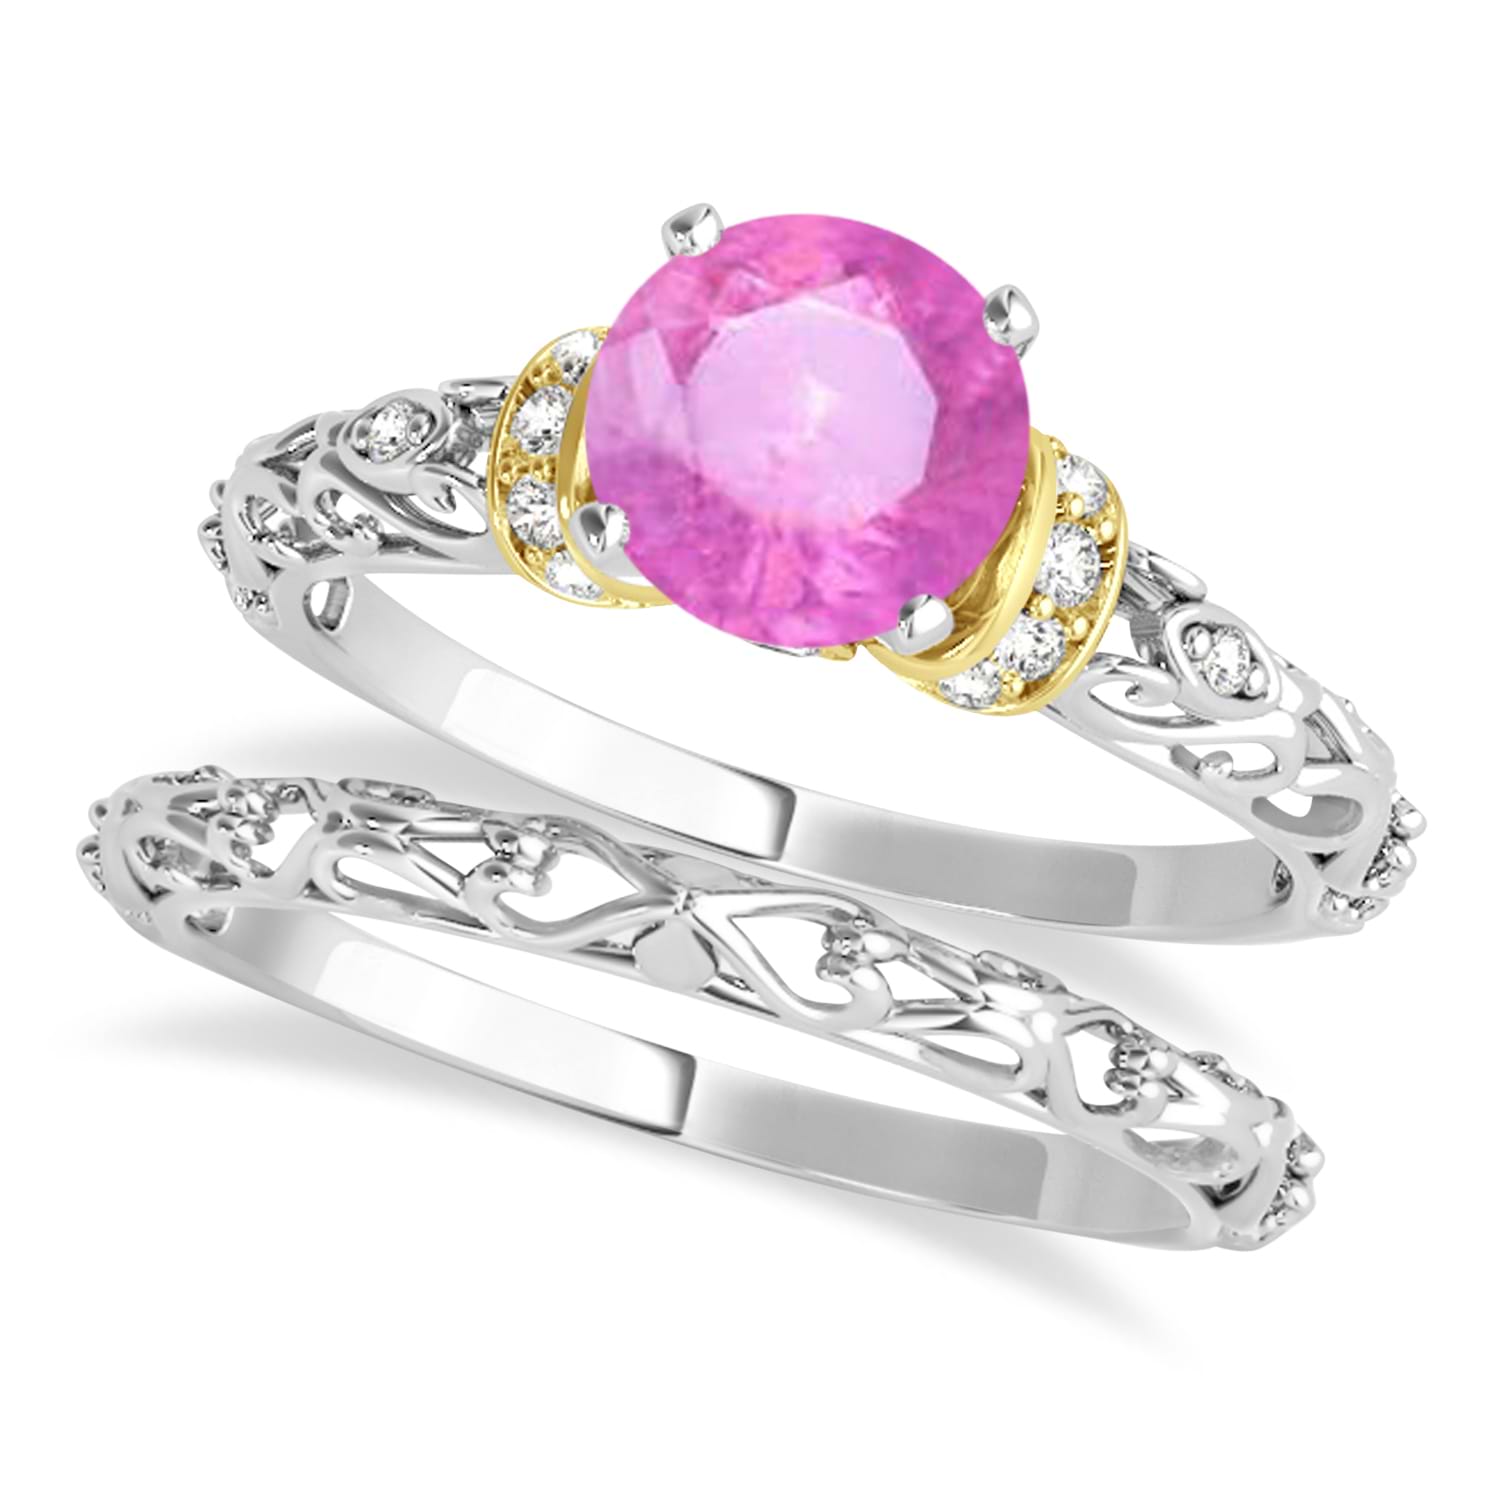 Pink Sapphire & Diamond Antique Style Bridal Set 18k Two-Tone Gold (1.12ct)